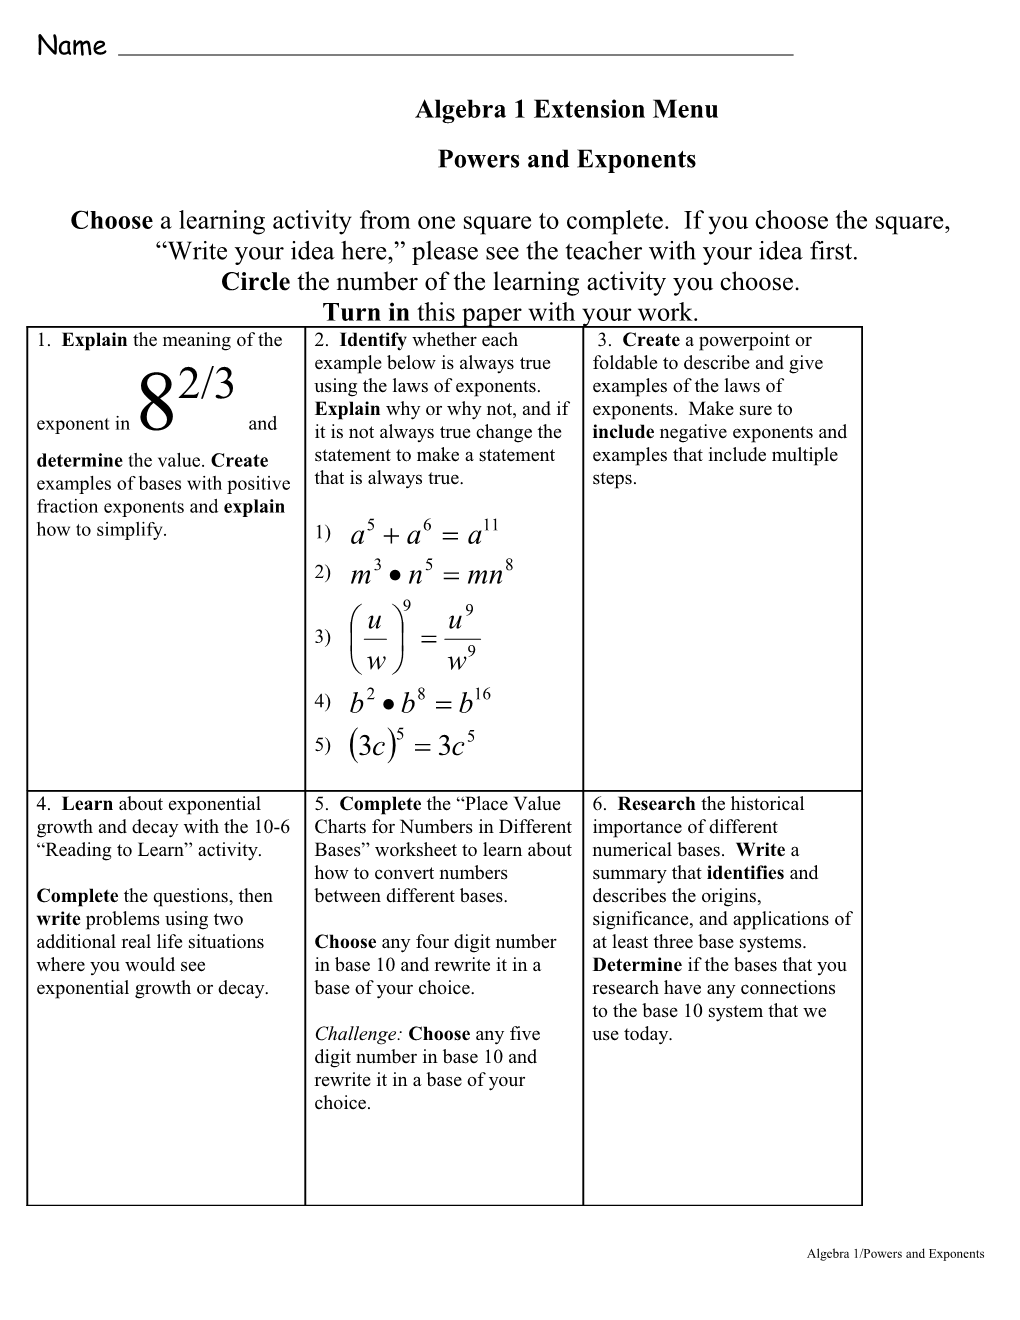 Algebra 1 Extension Menu